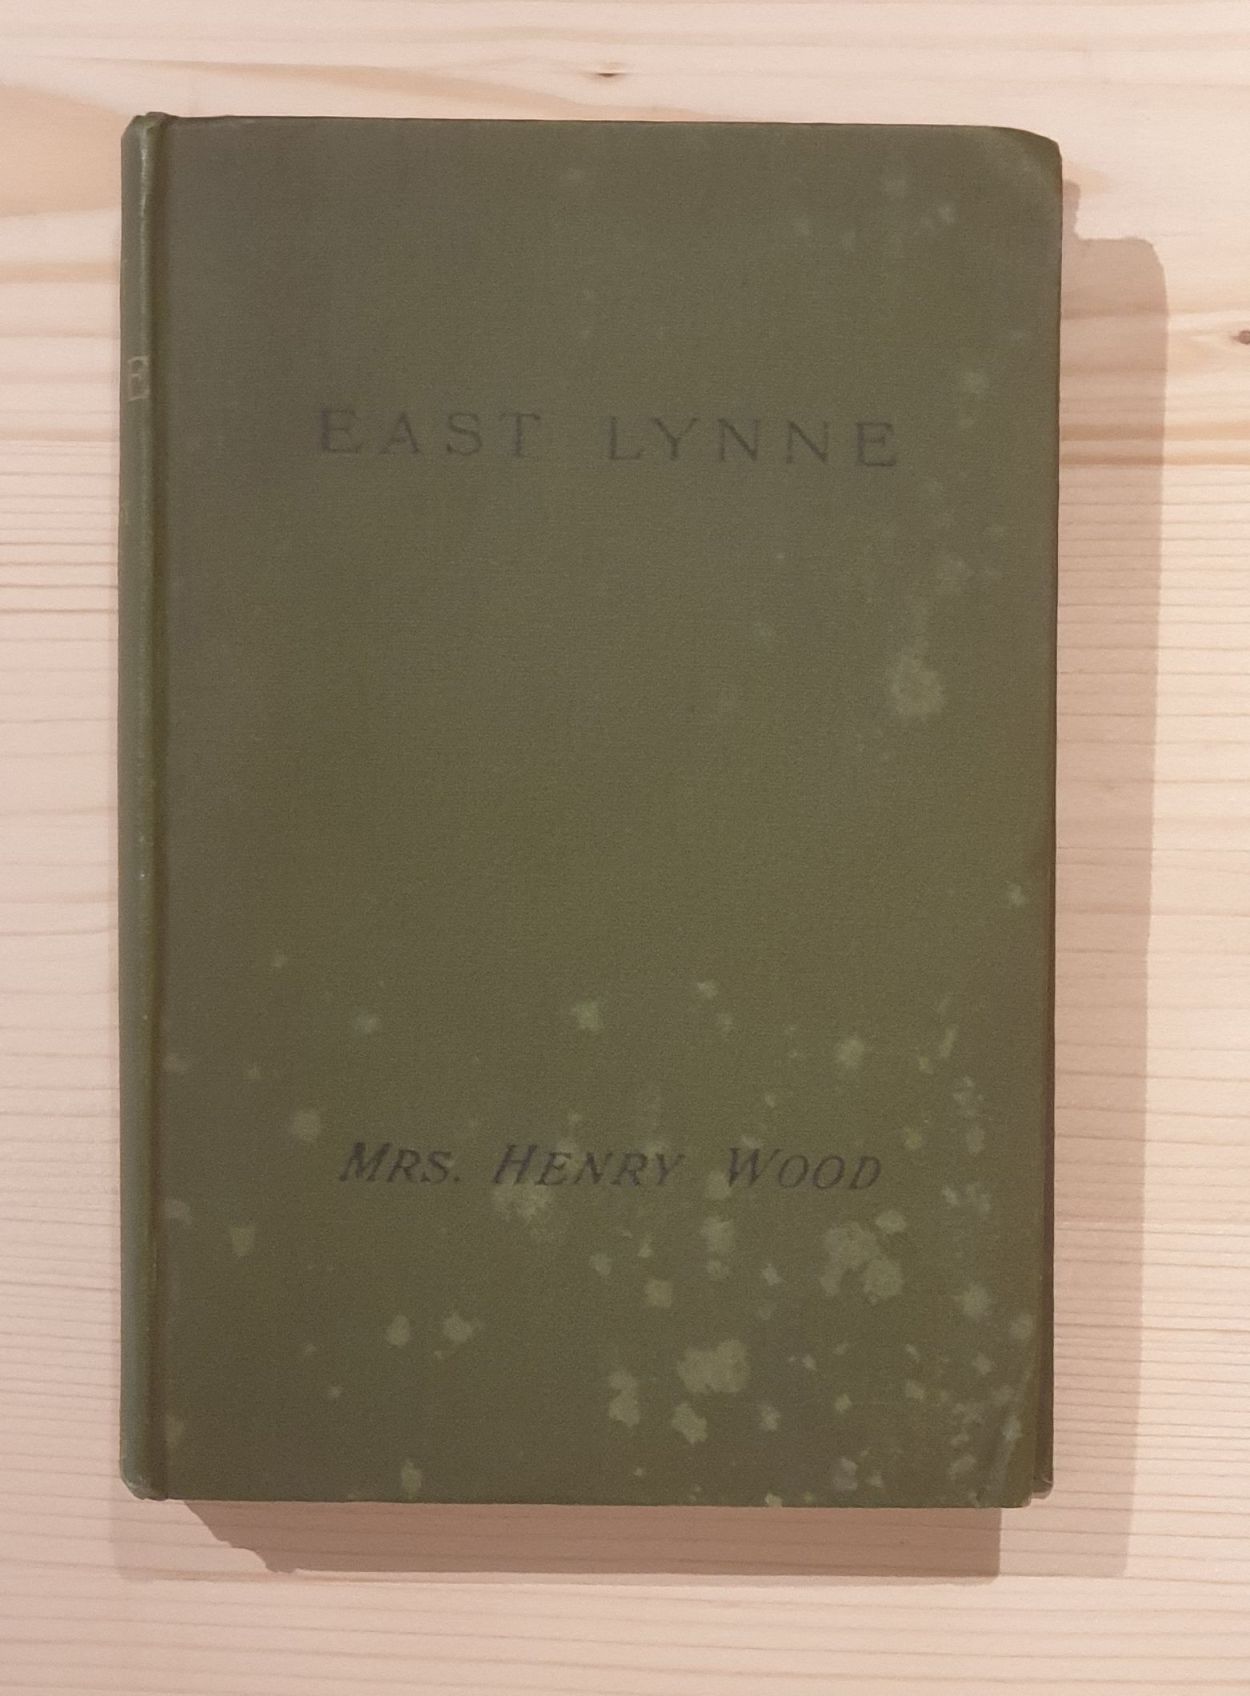 Wood, Henry:  East Lynne 